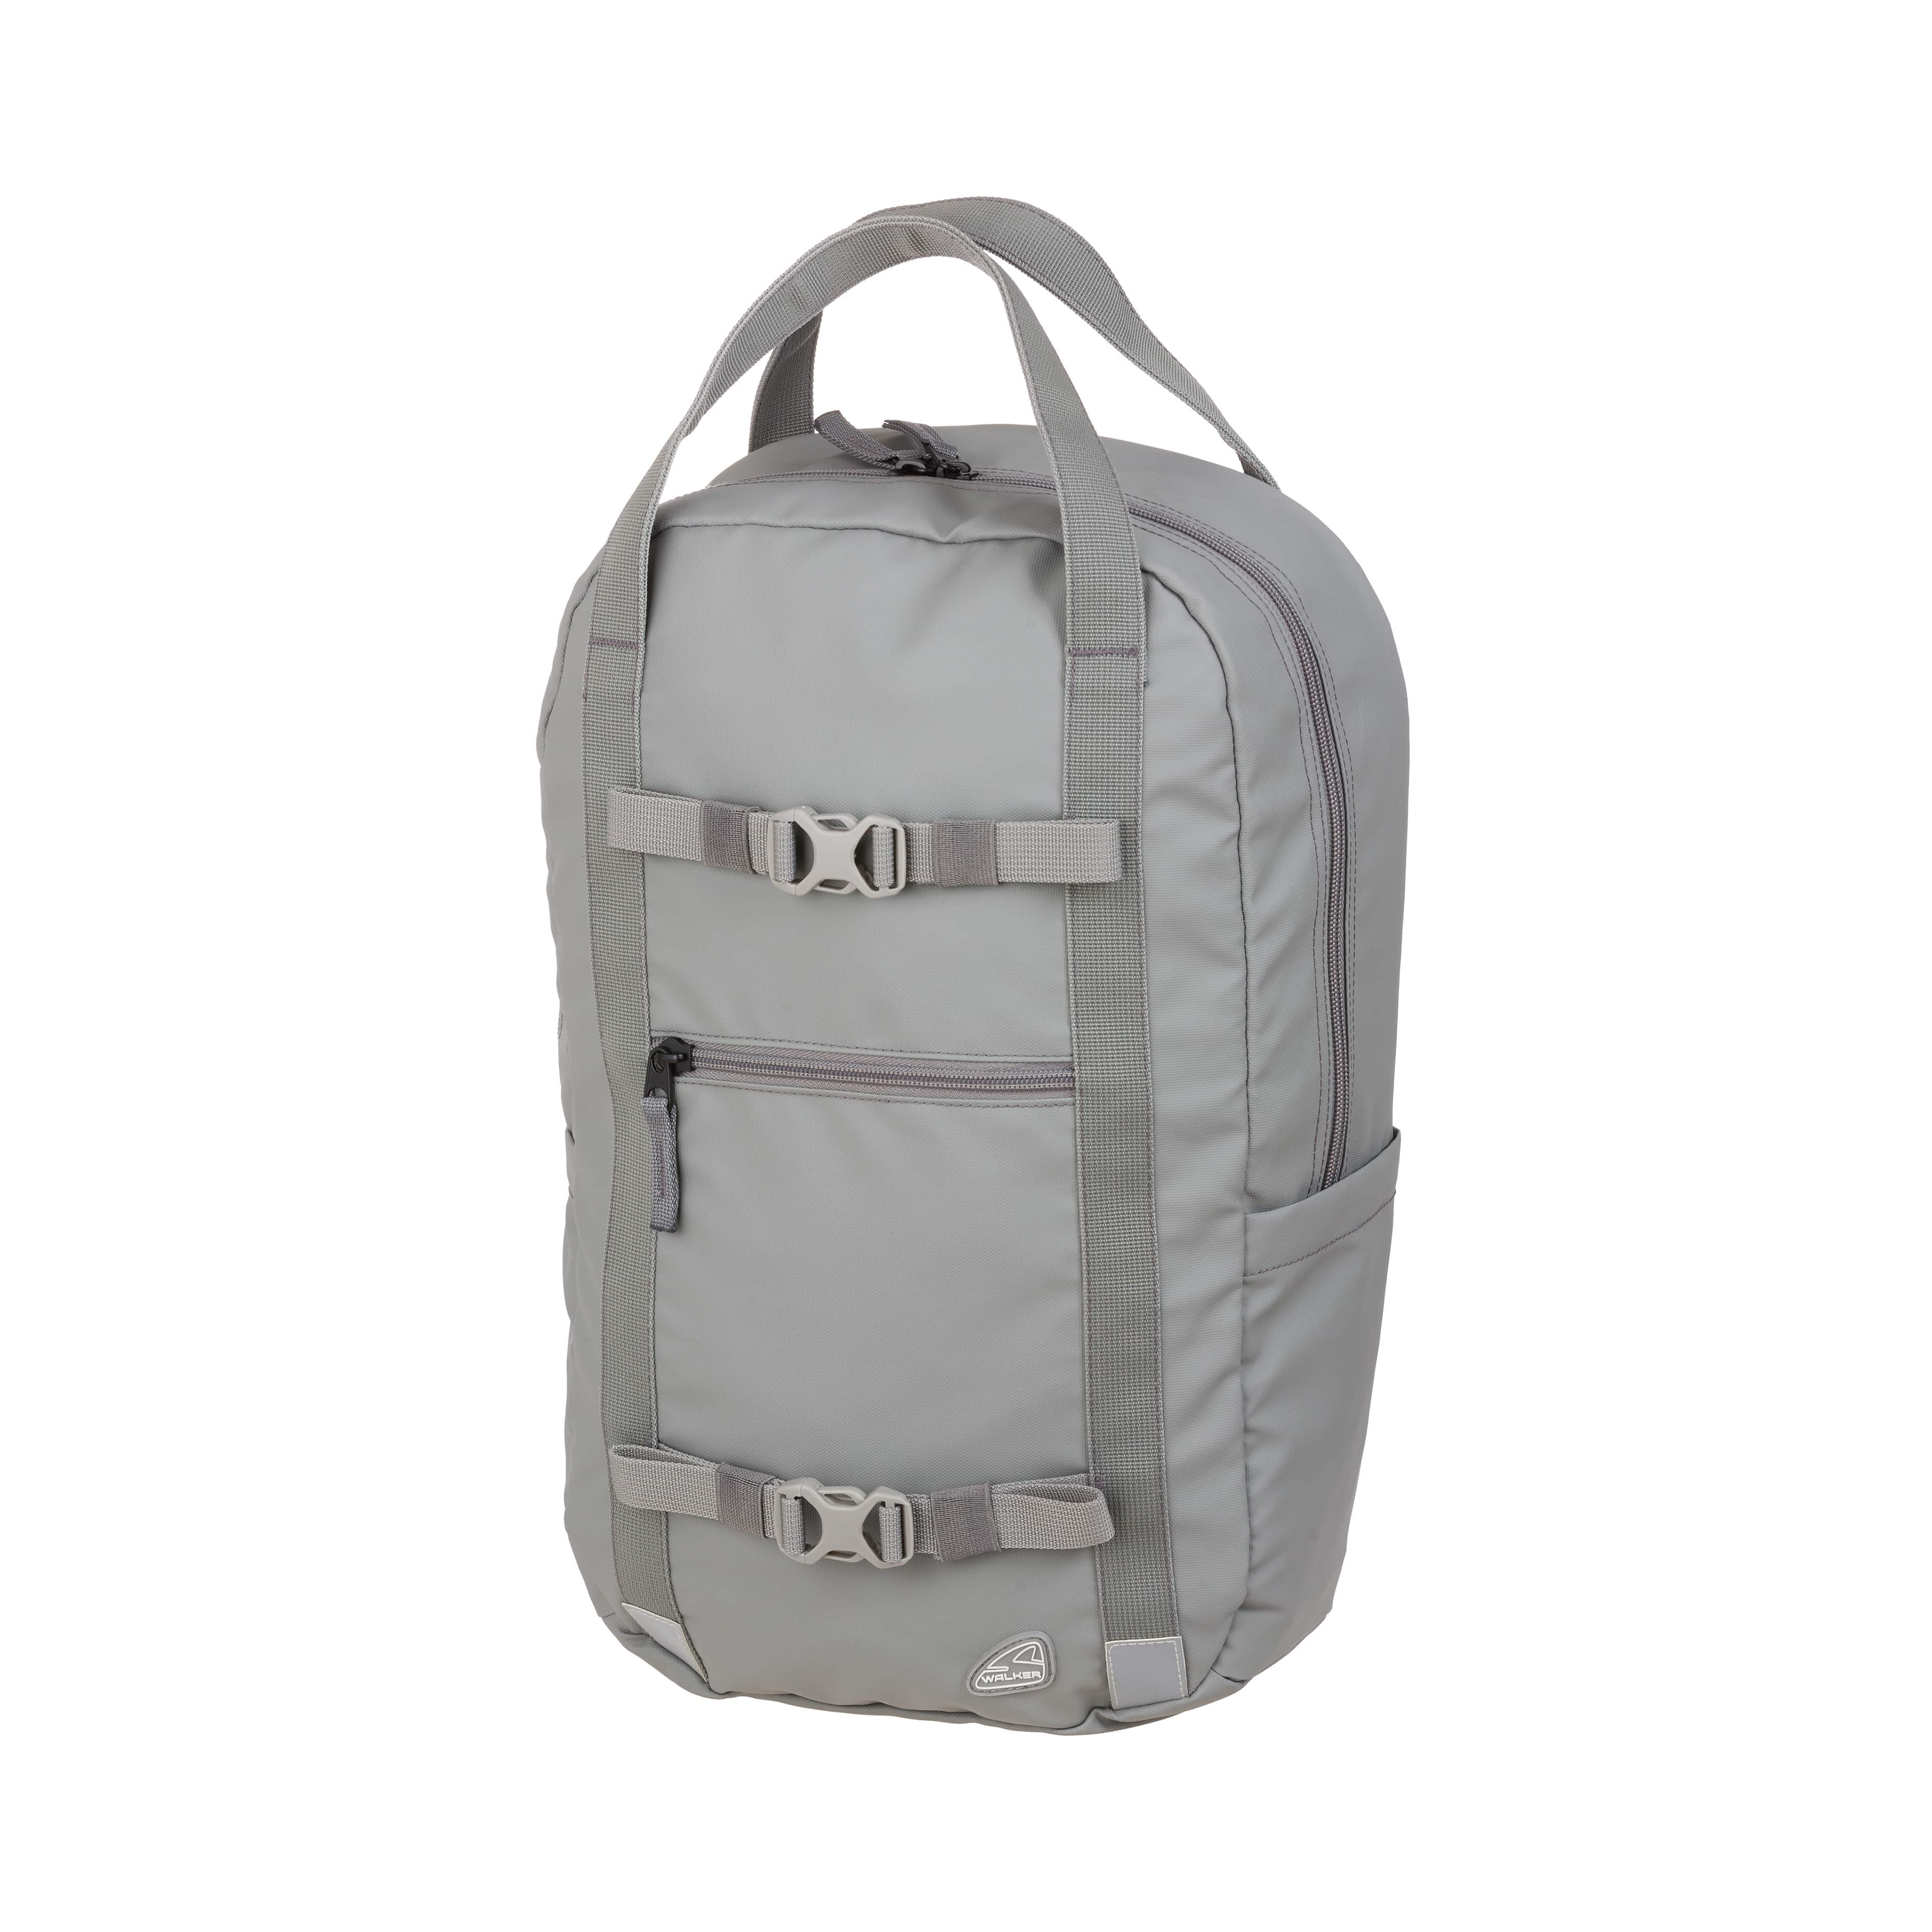 Yoga backpack Sense gray from Walker – Schneiders Vienna GmbH